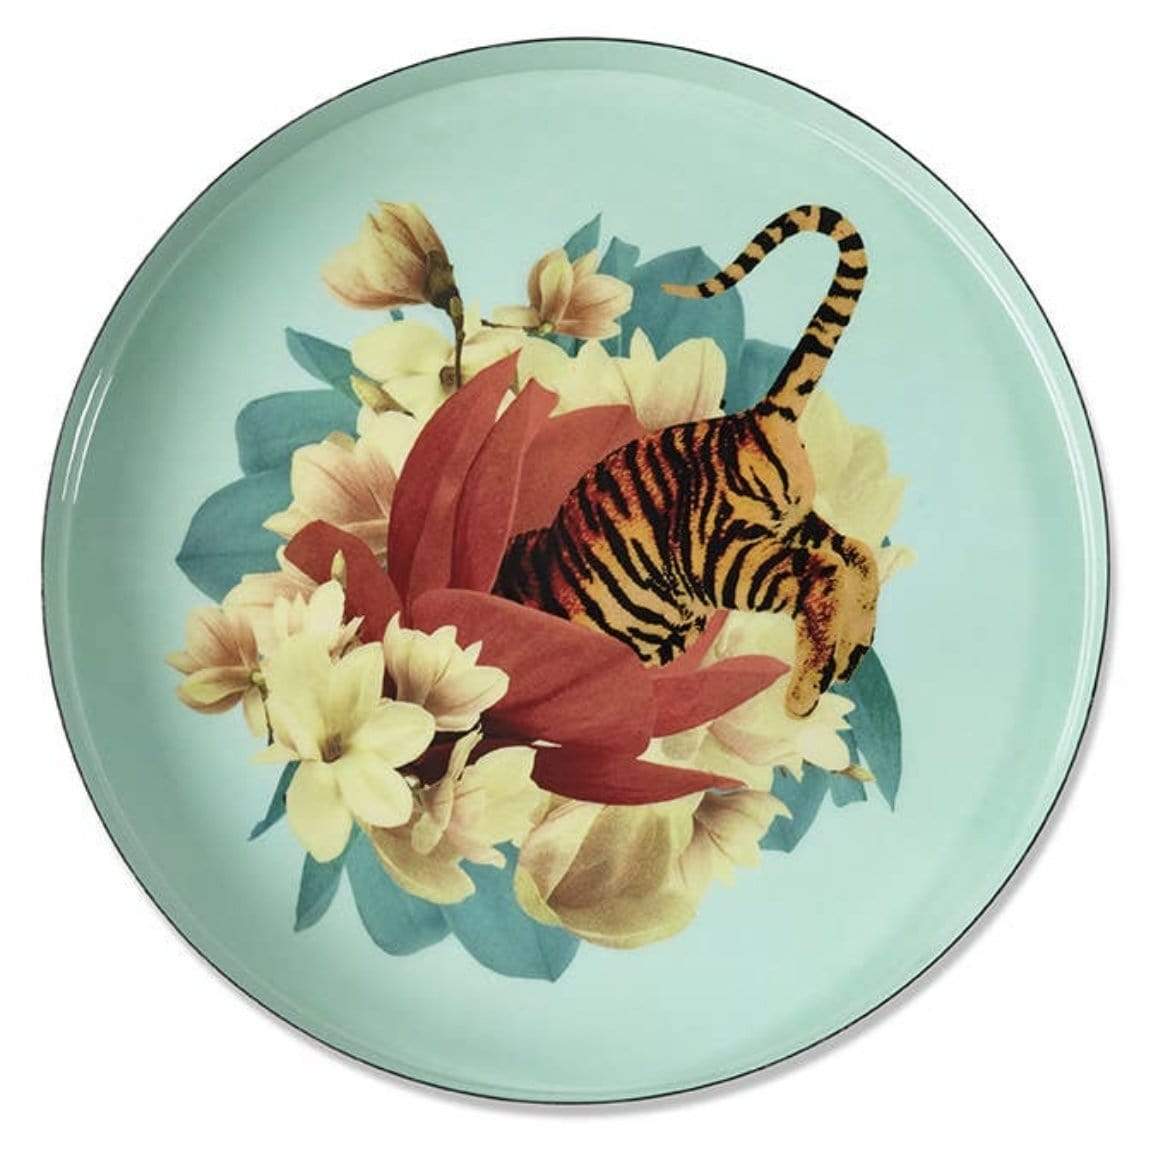 Tiger Flower Handmade Iron Round Tray - PORCH